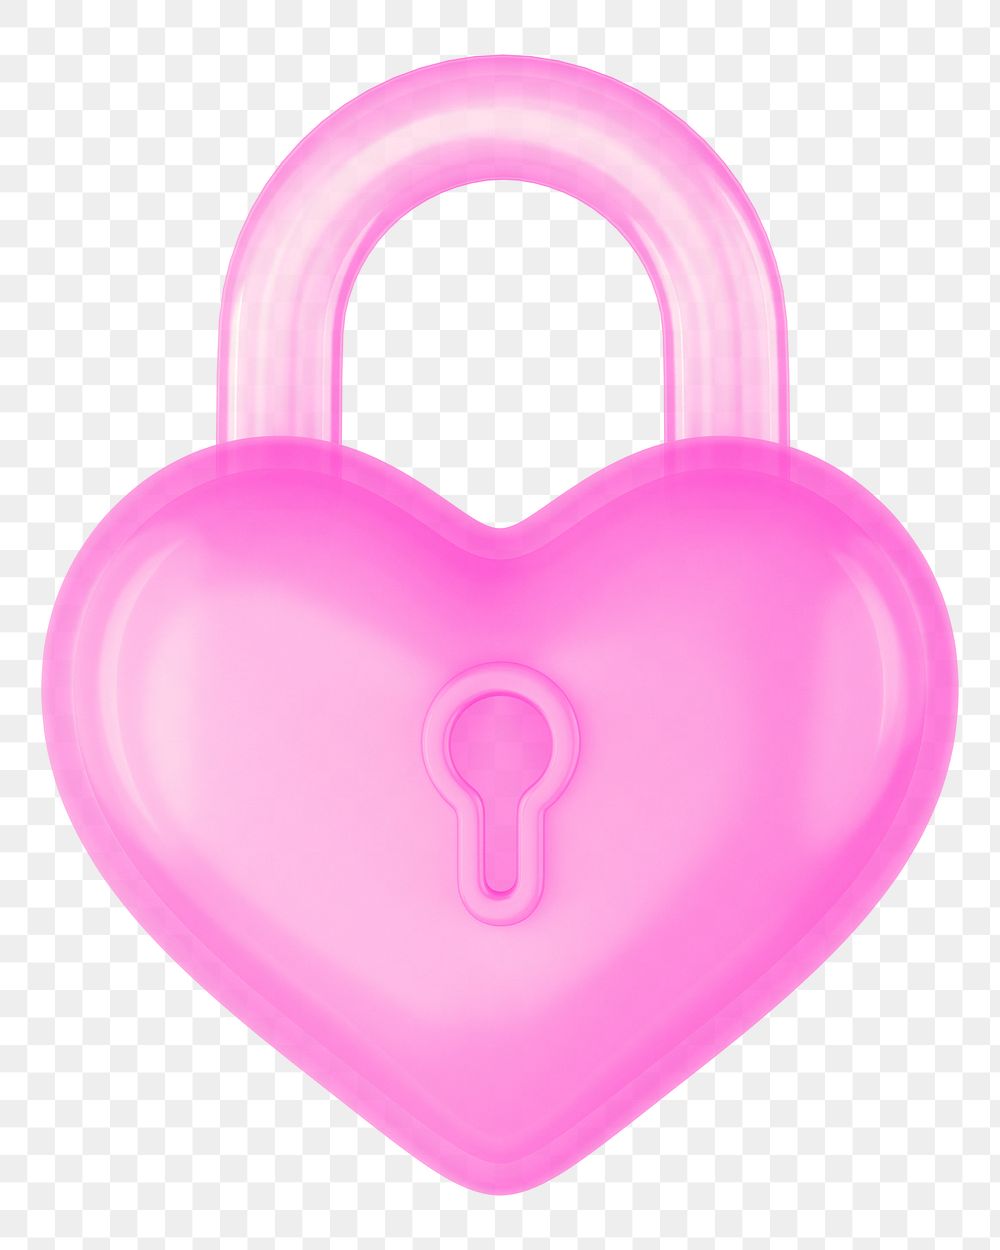 Pink heart padlock png 3D element, transparent background